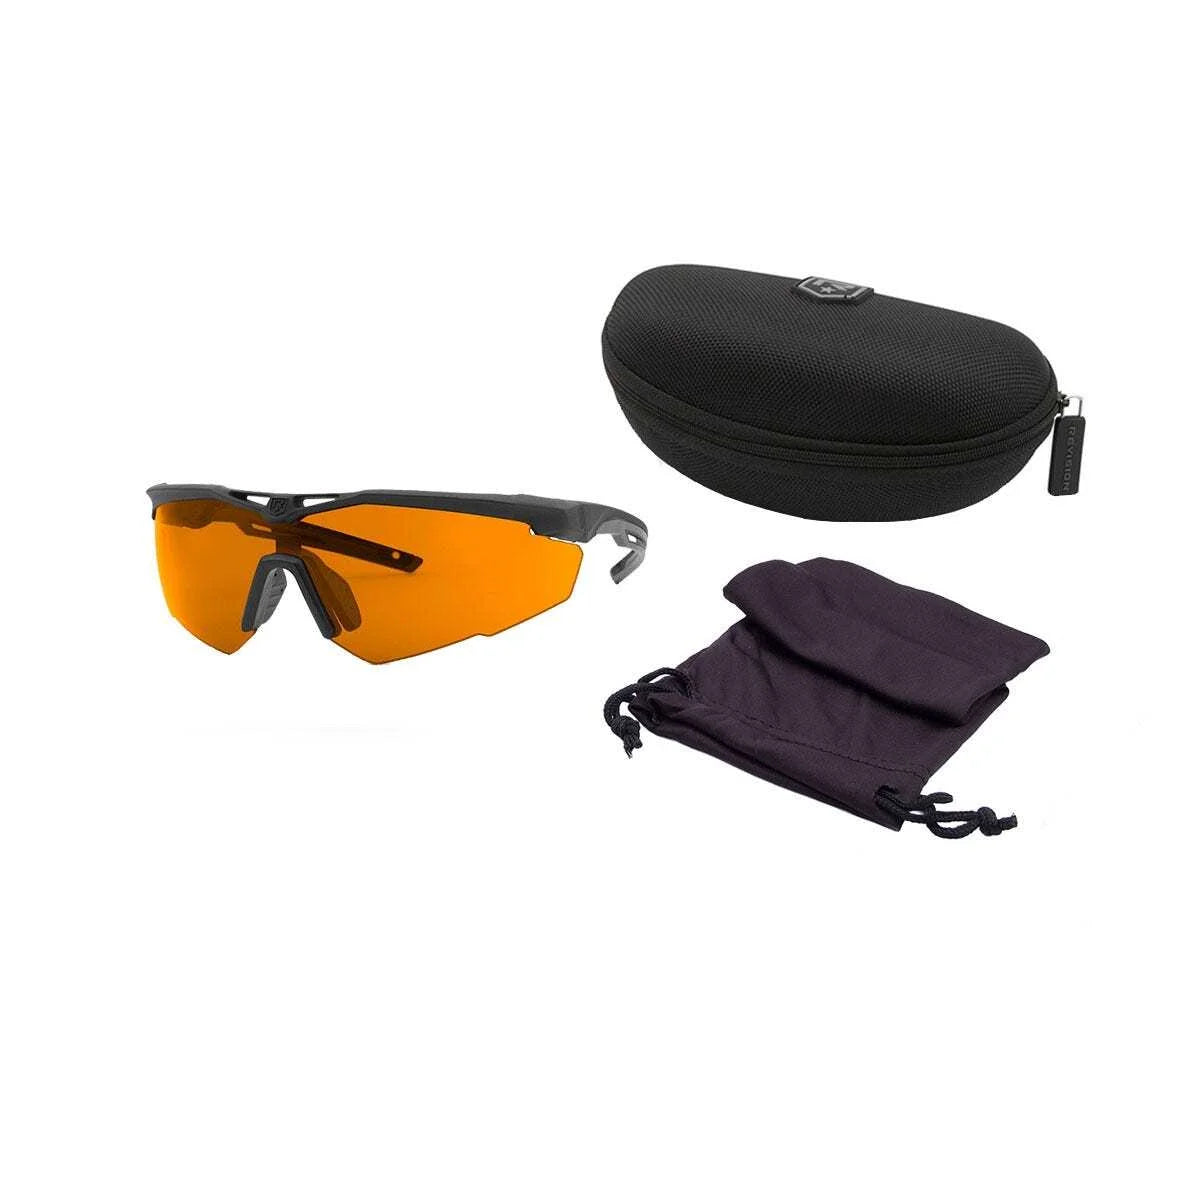 Revision StingerHawk Eyewear GI-19 Laser Protective Basic Kit